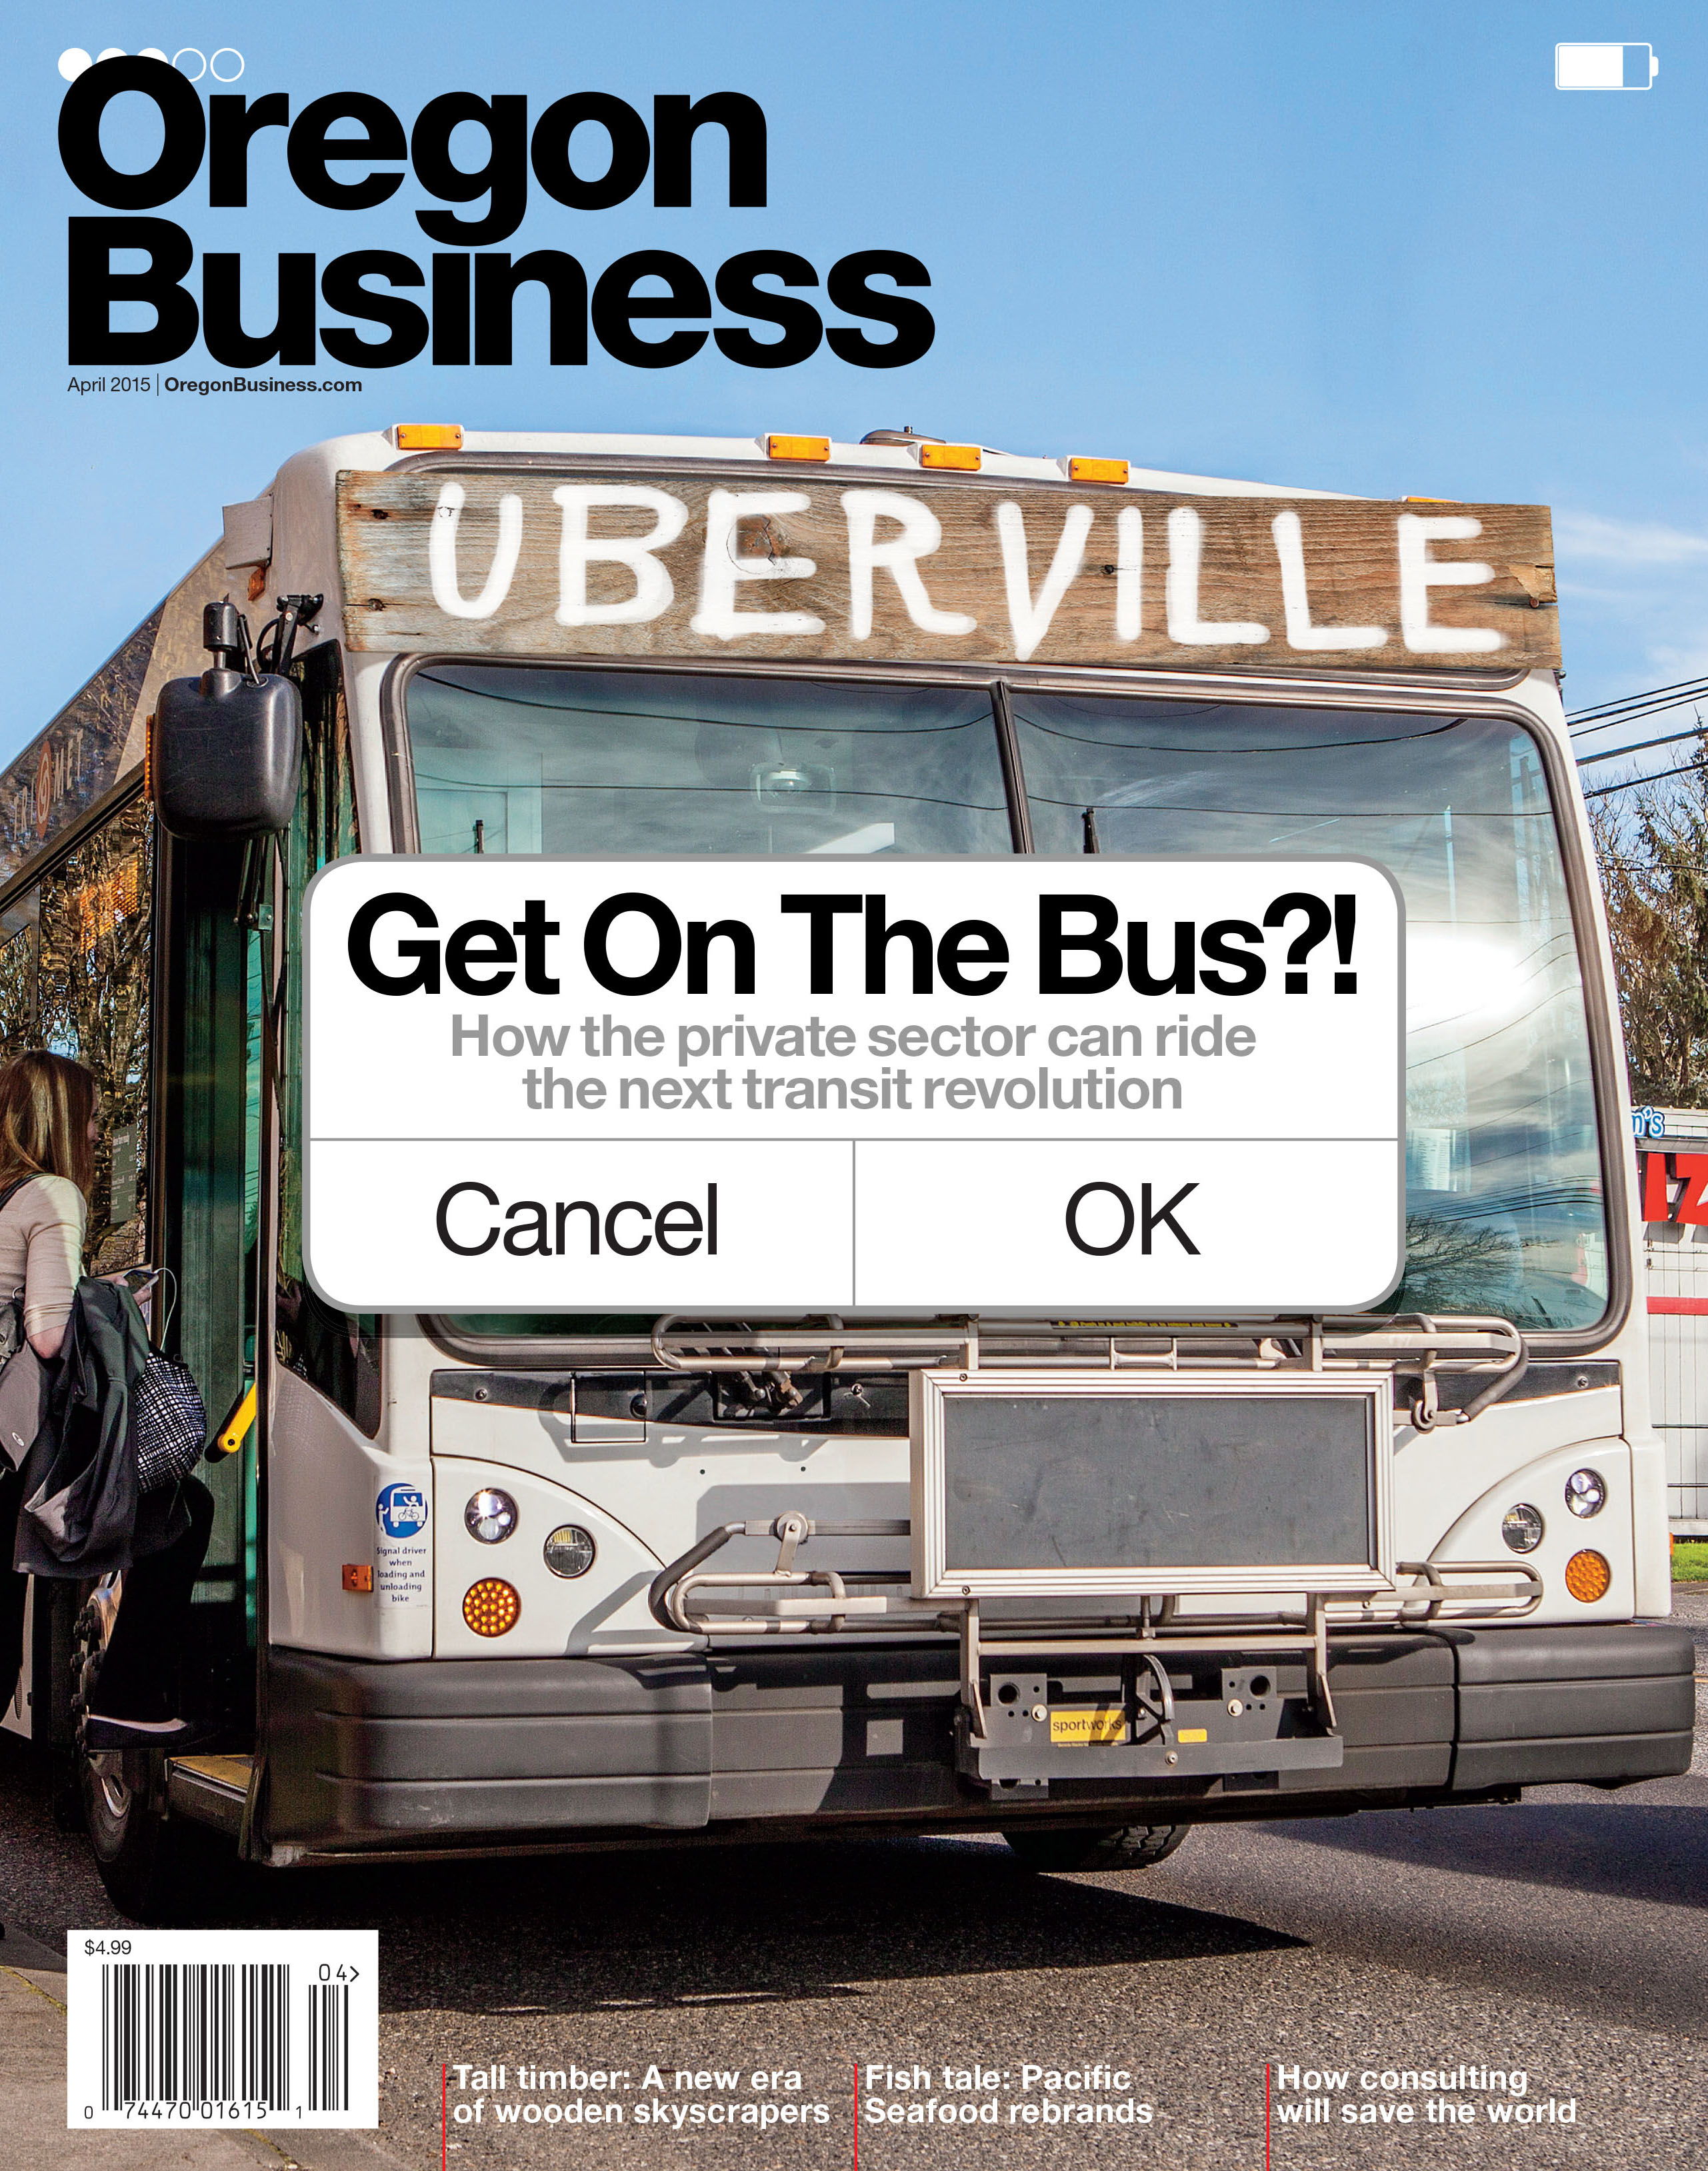 Oregon Business Cover April 2015 Bus with destination Uberville